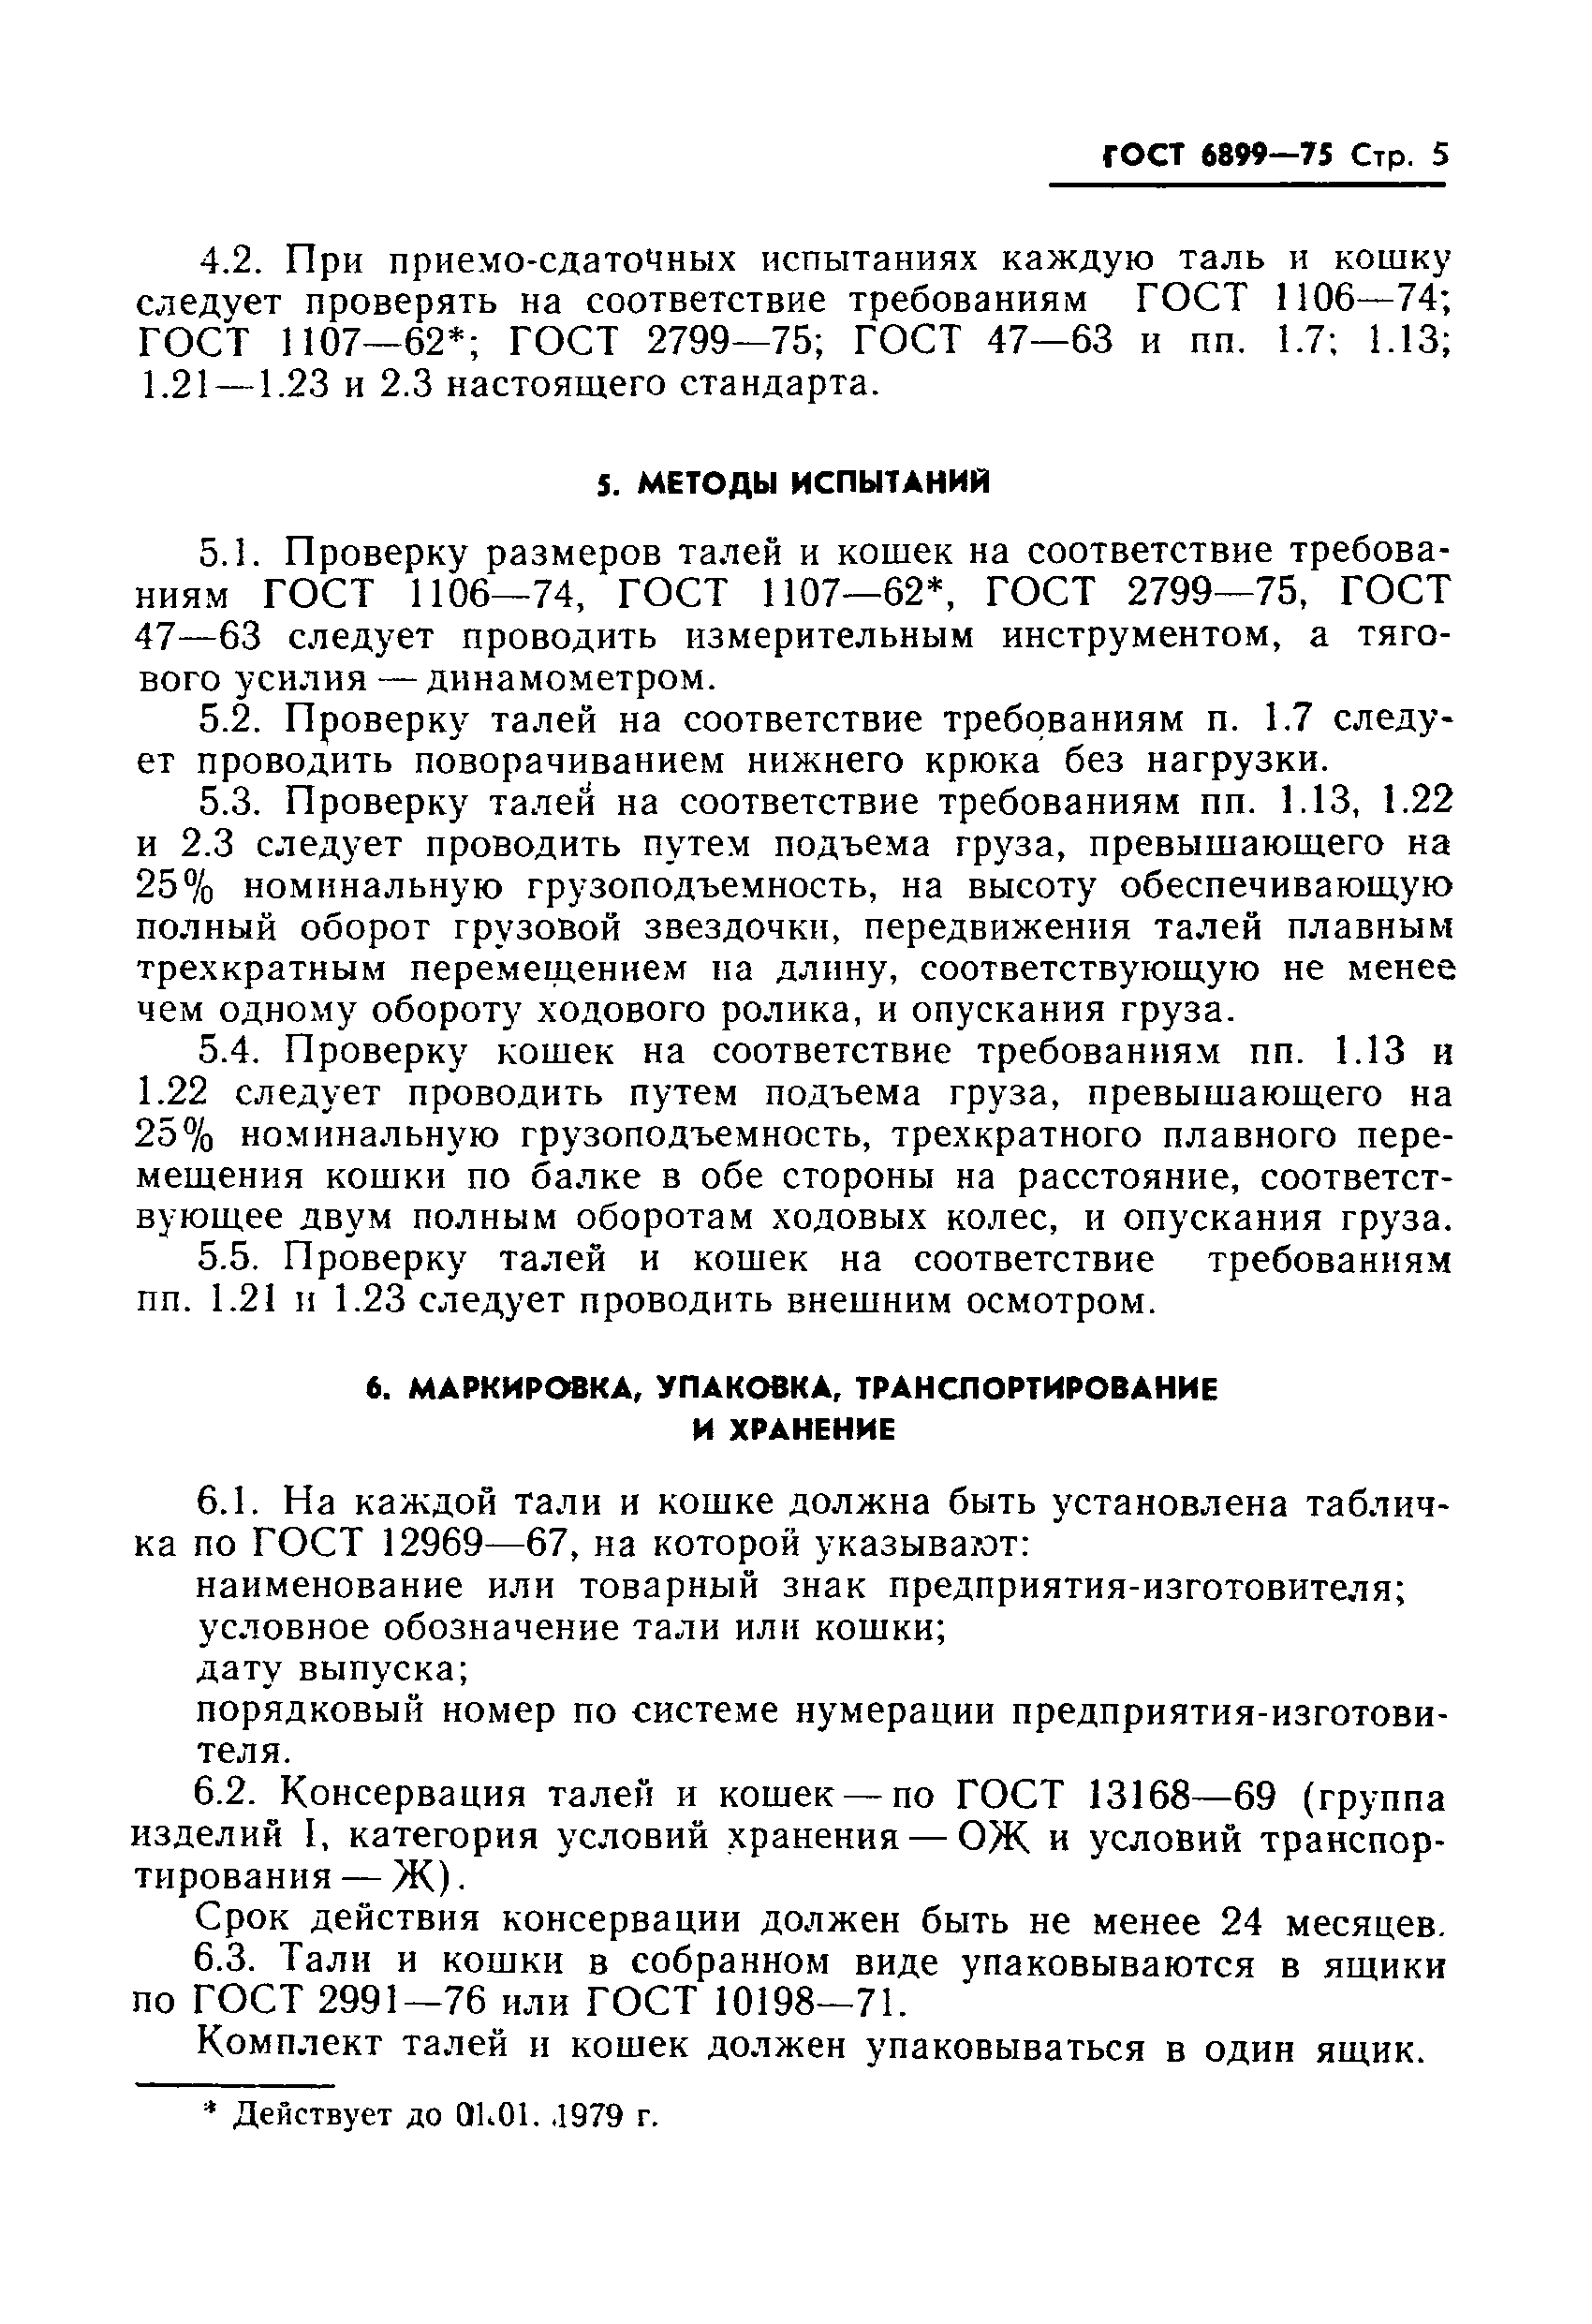 ГОСТ 6899-75